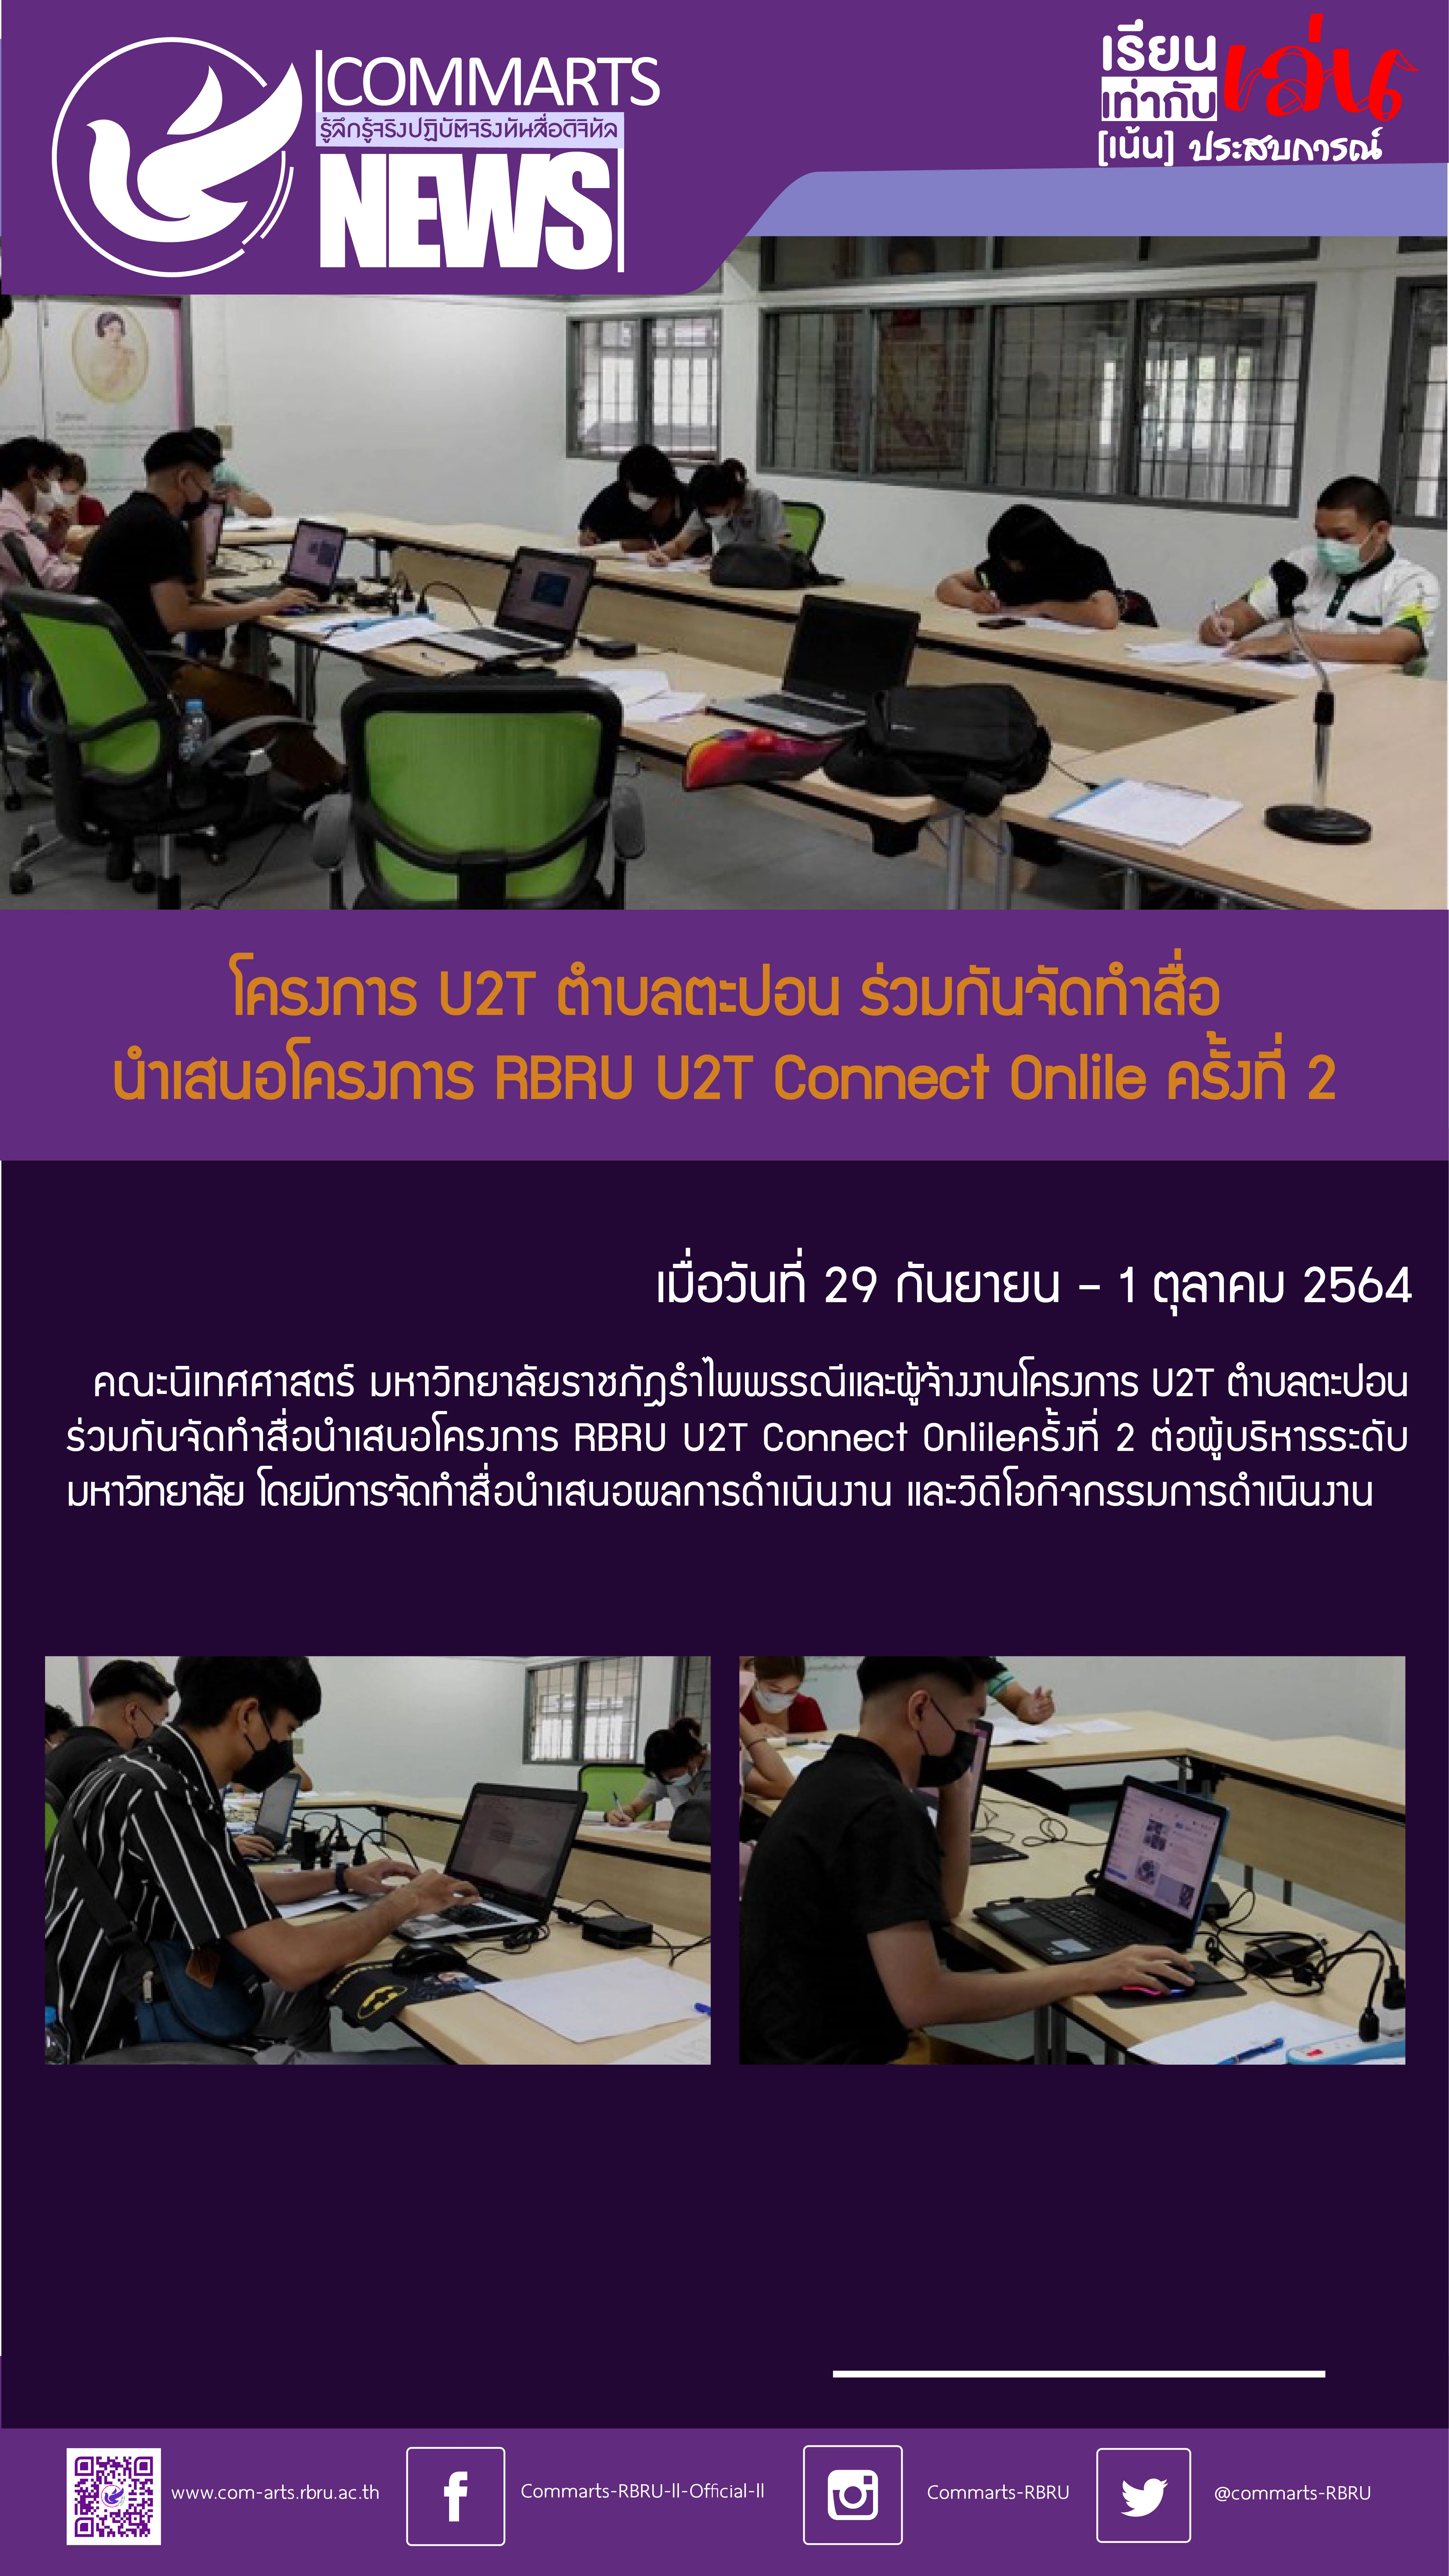 U2T ตะปอน ร่วมกันจัดทำสื่อนำเสนอโครงการ RBRU U2T Connect Onlile ครั้งที่ 2